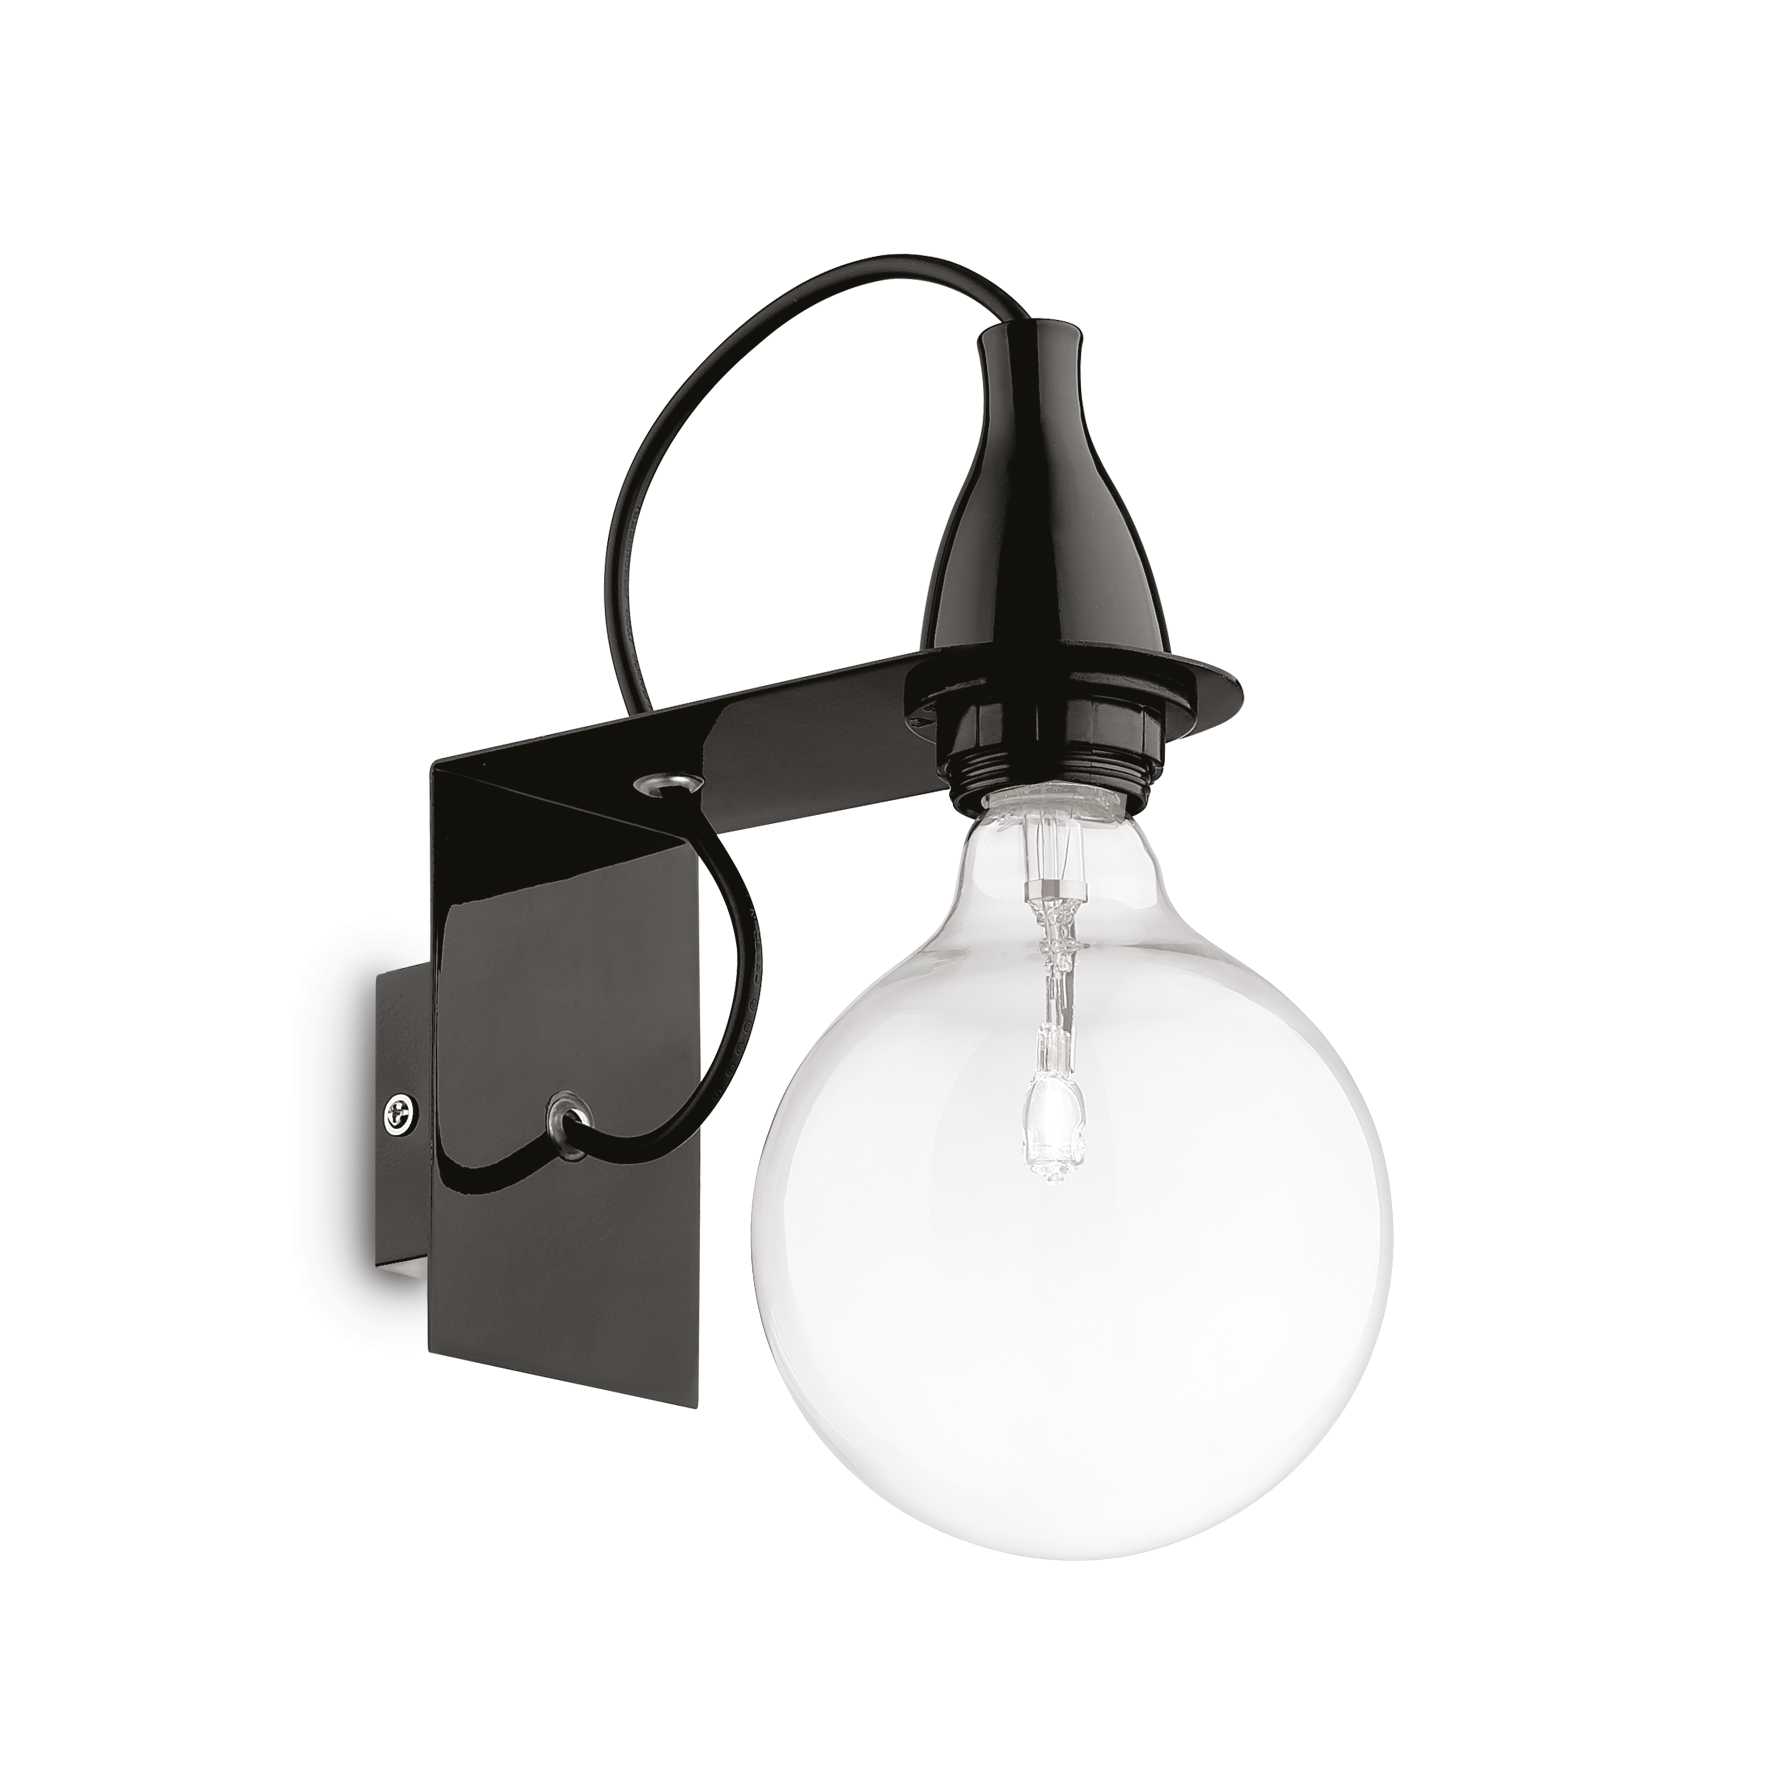 AD hotelska oprema Zidna lampa Minimal ap- Crna slika proizvoda